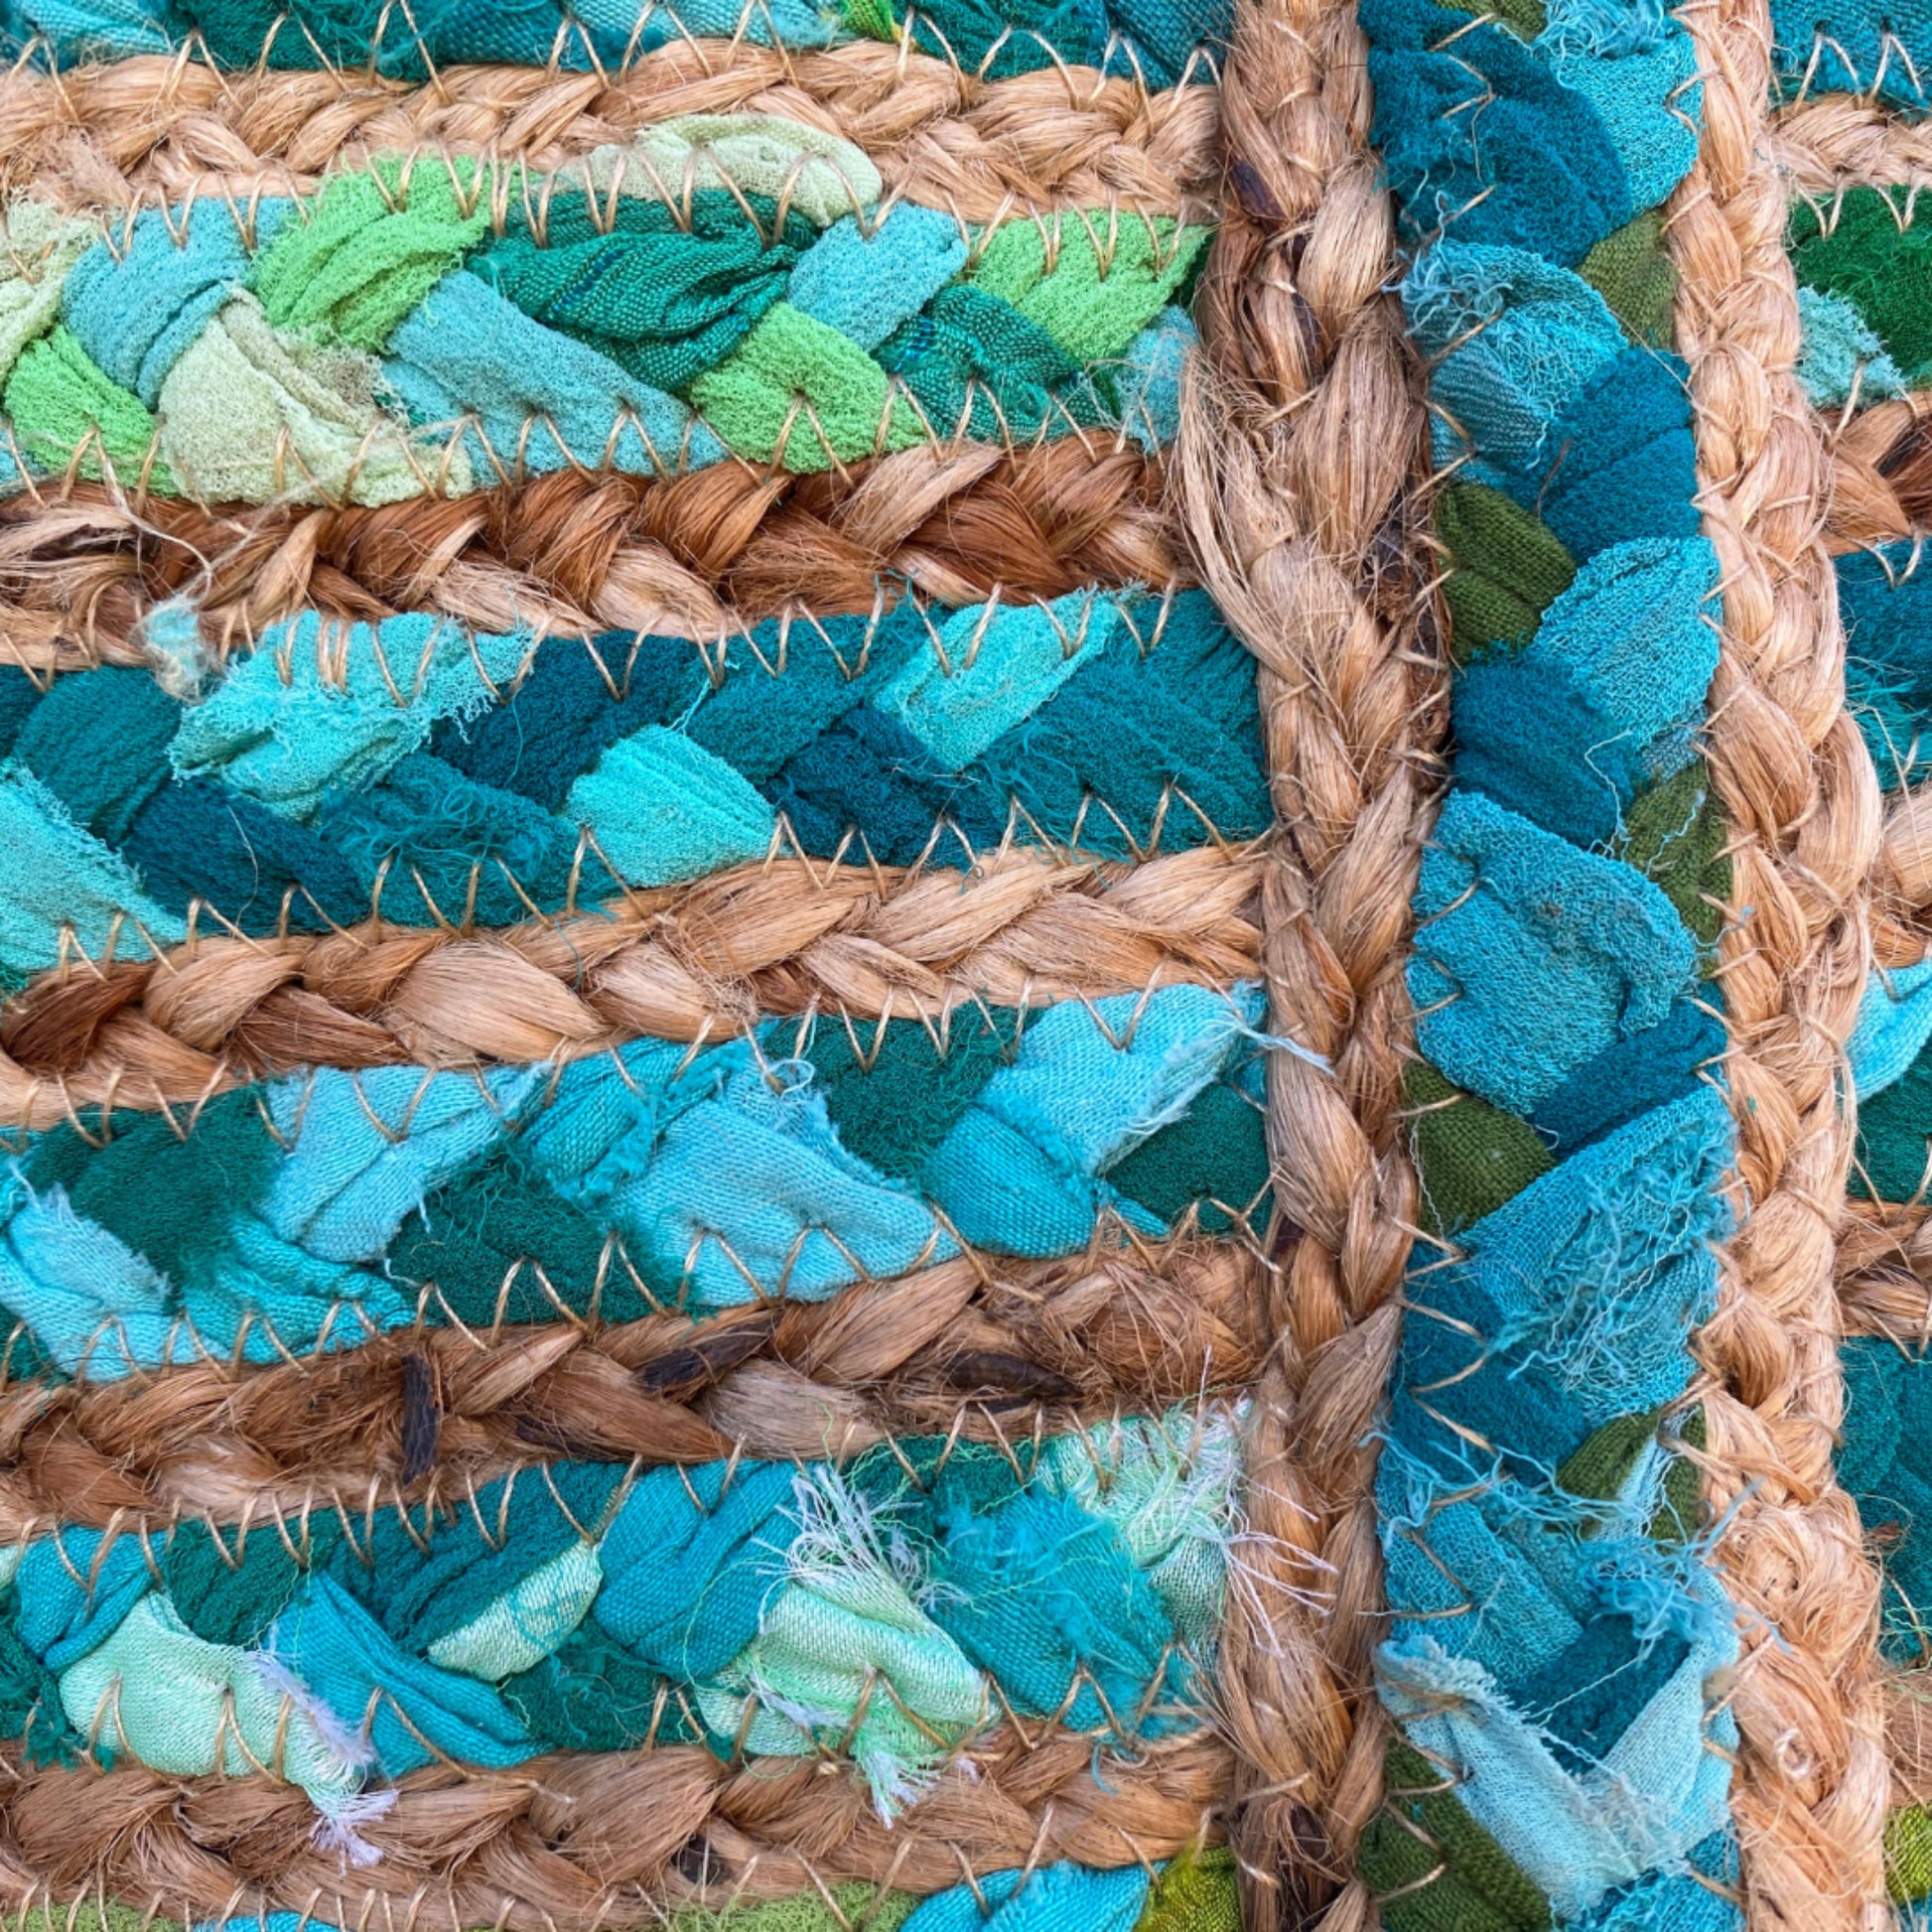 Green Cloth & Jute Tote Bag - Handmade, Sustainable, Repurposed Materials - Aksa Home Decor 